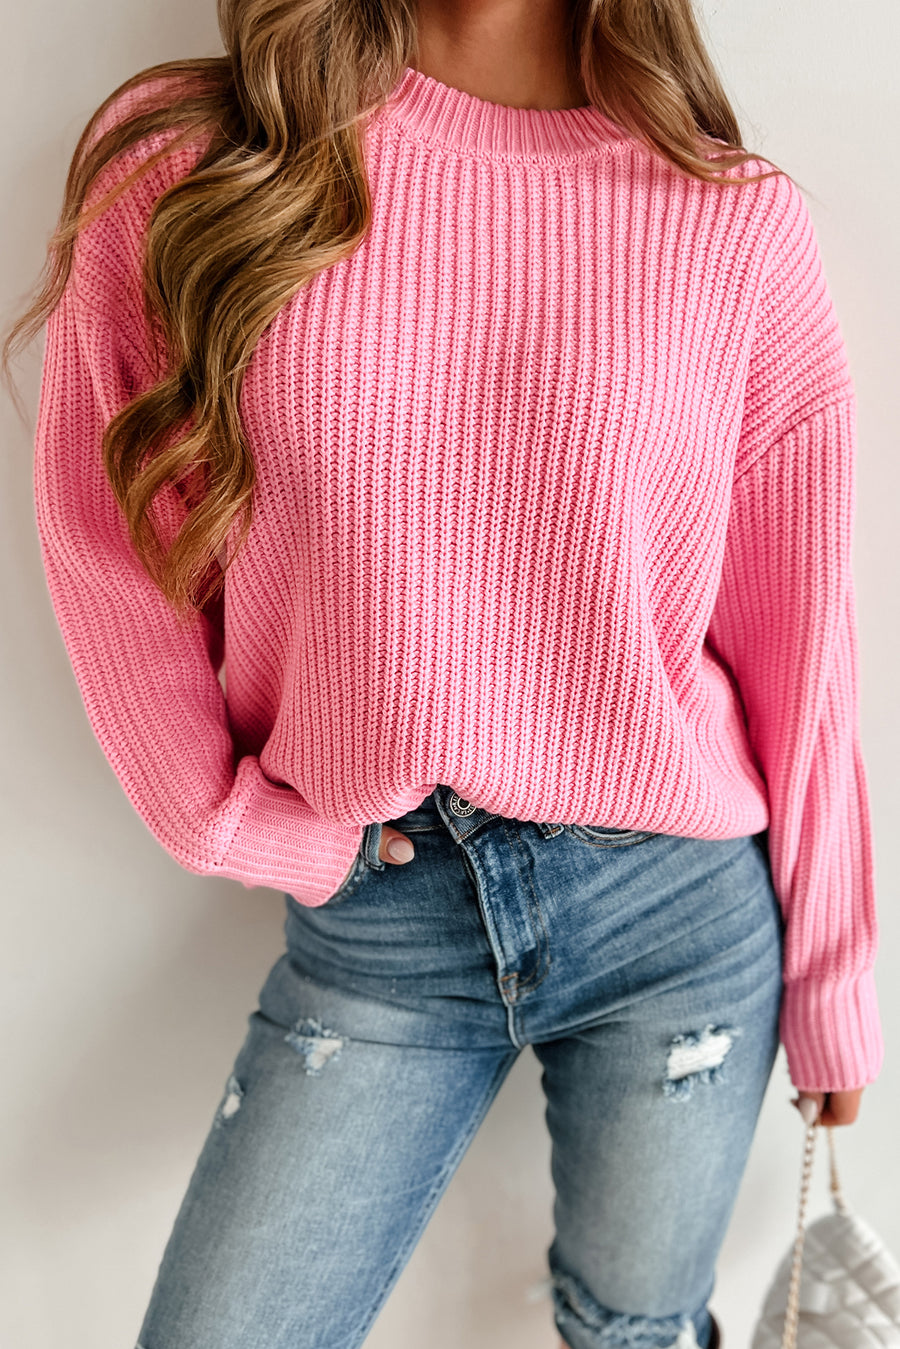 Catch A Break Crewneck Sweater (Pink) - NanaMacs